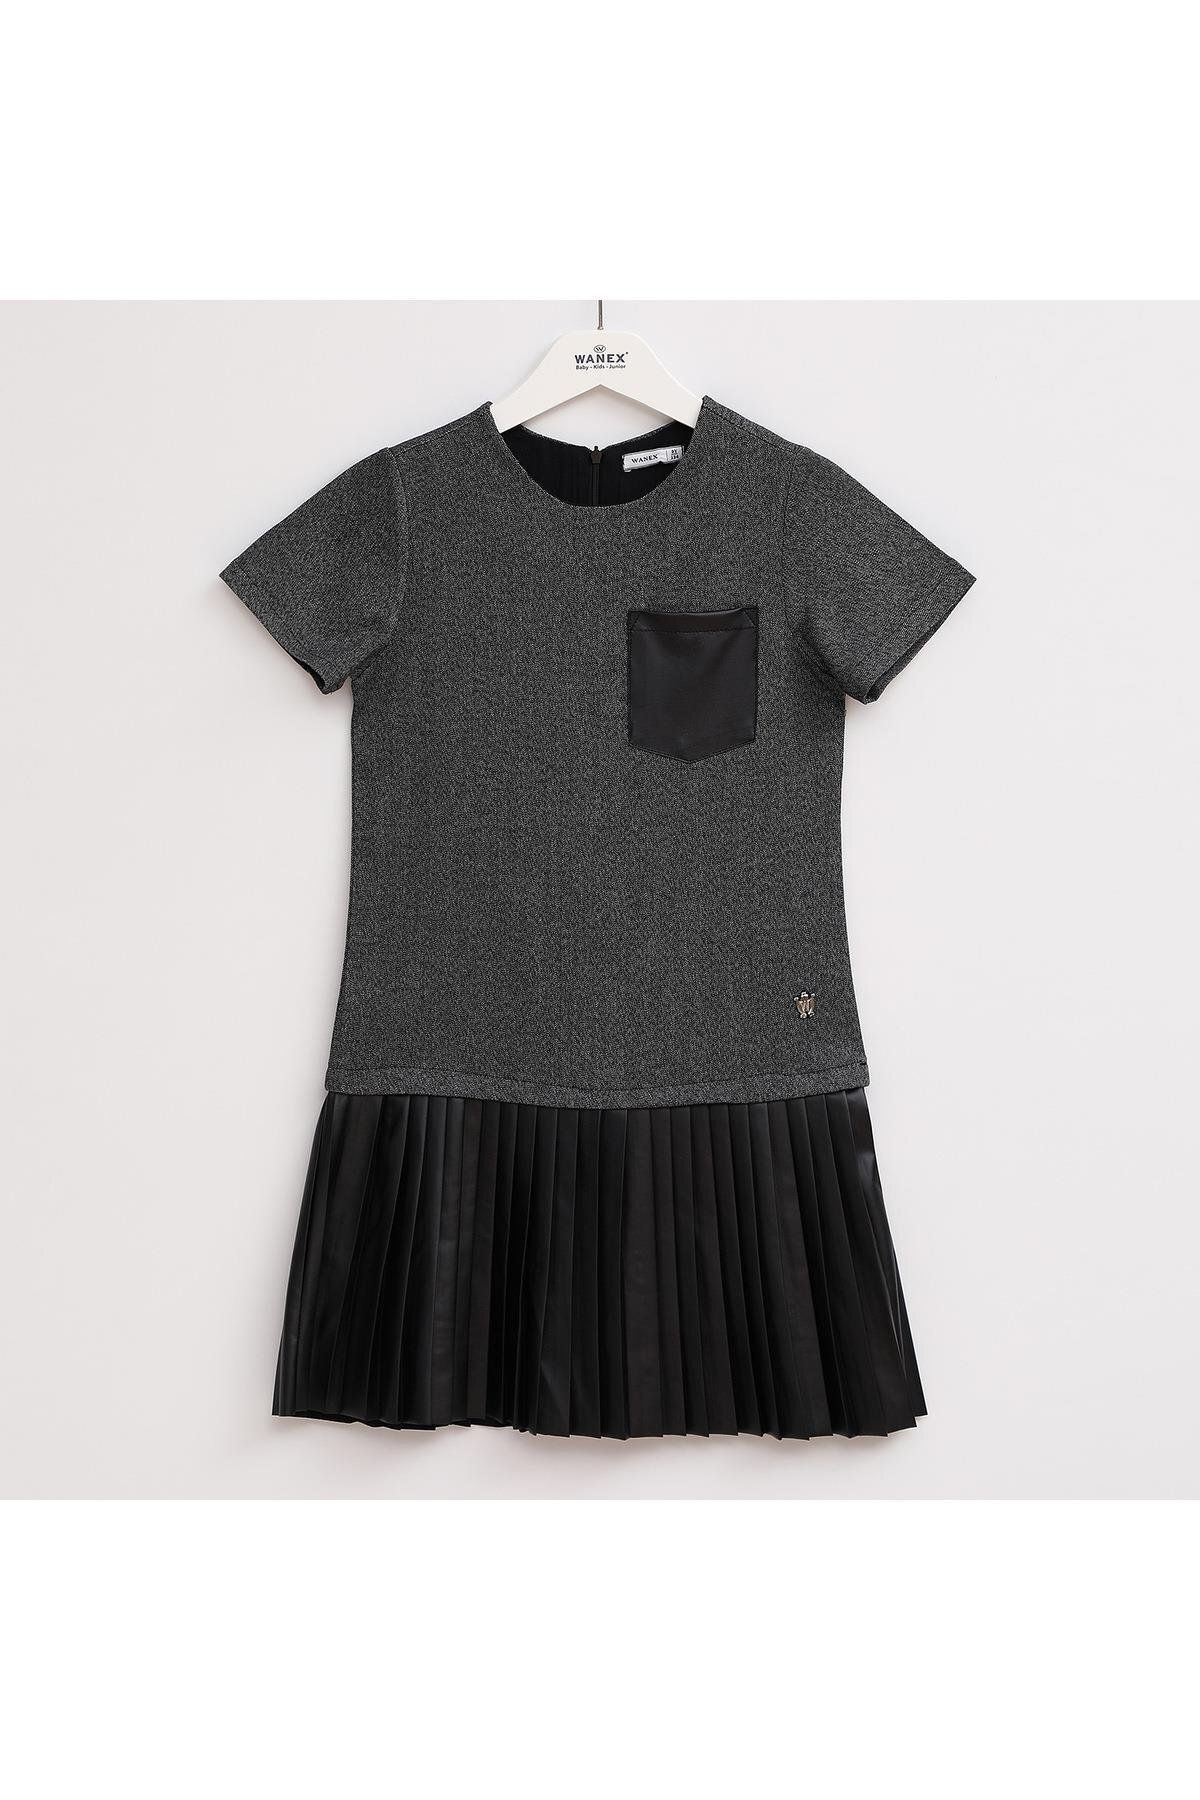 WANEX Kız Çocuk Kısa Kol Elbise - 4219211 - Siyah